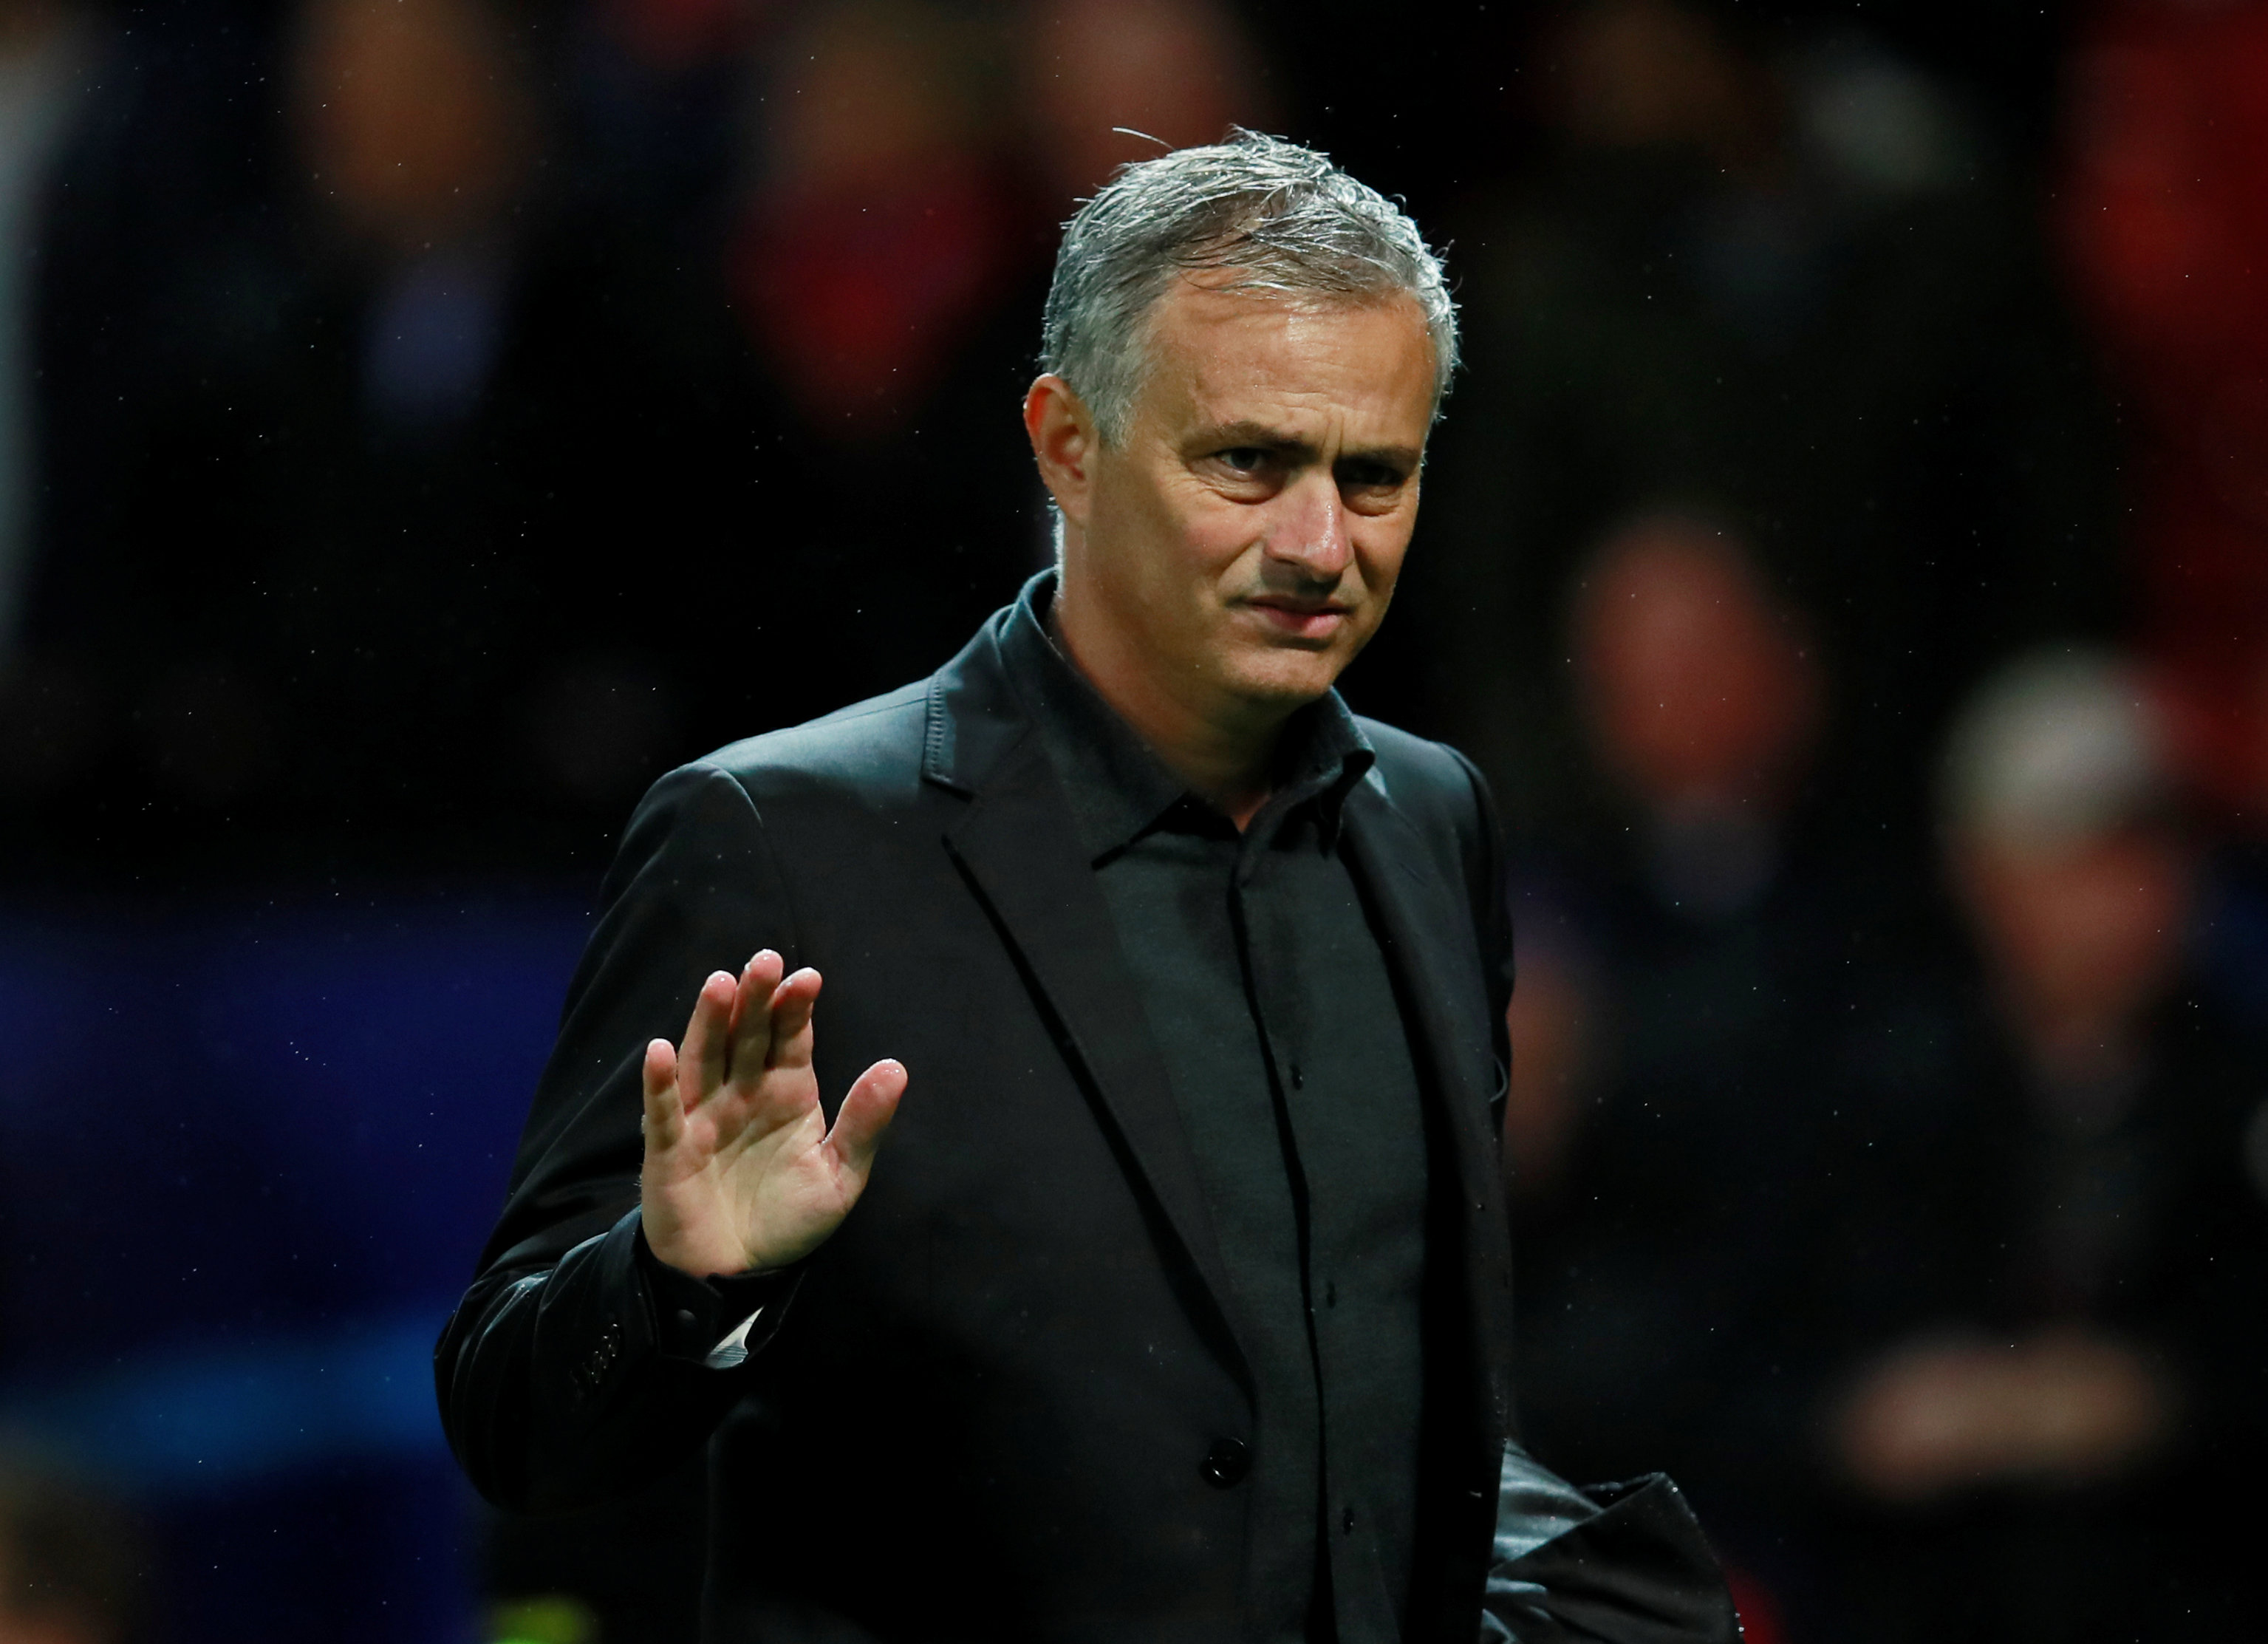 Football: Annoyed Mourinho warns Man United players against 'fantasy football'